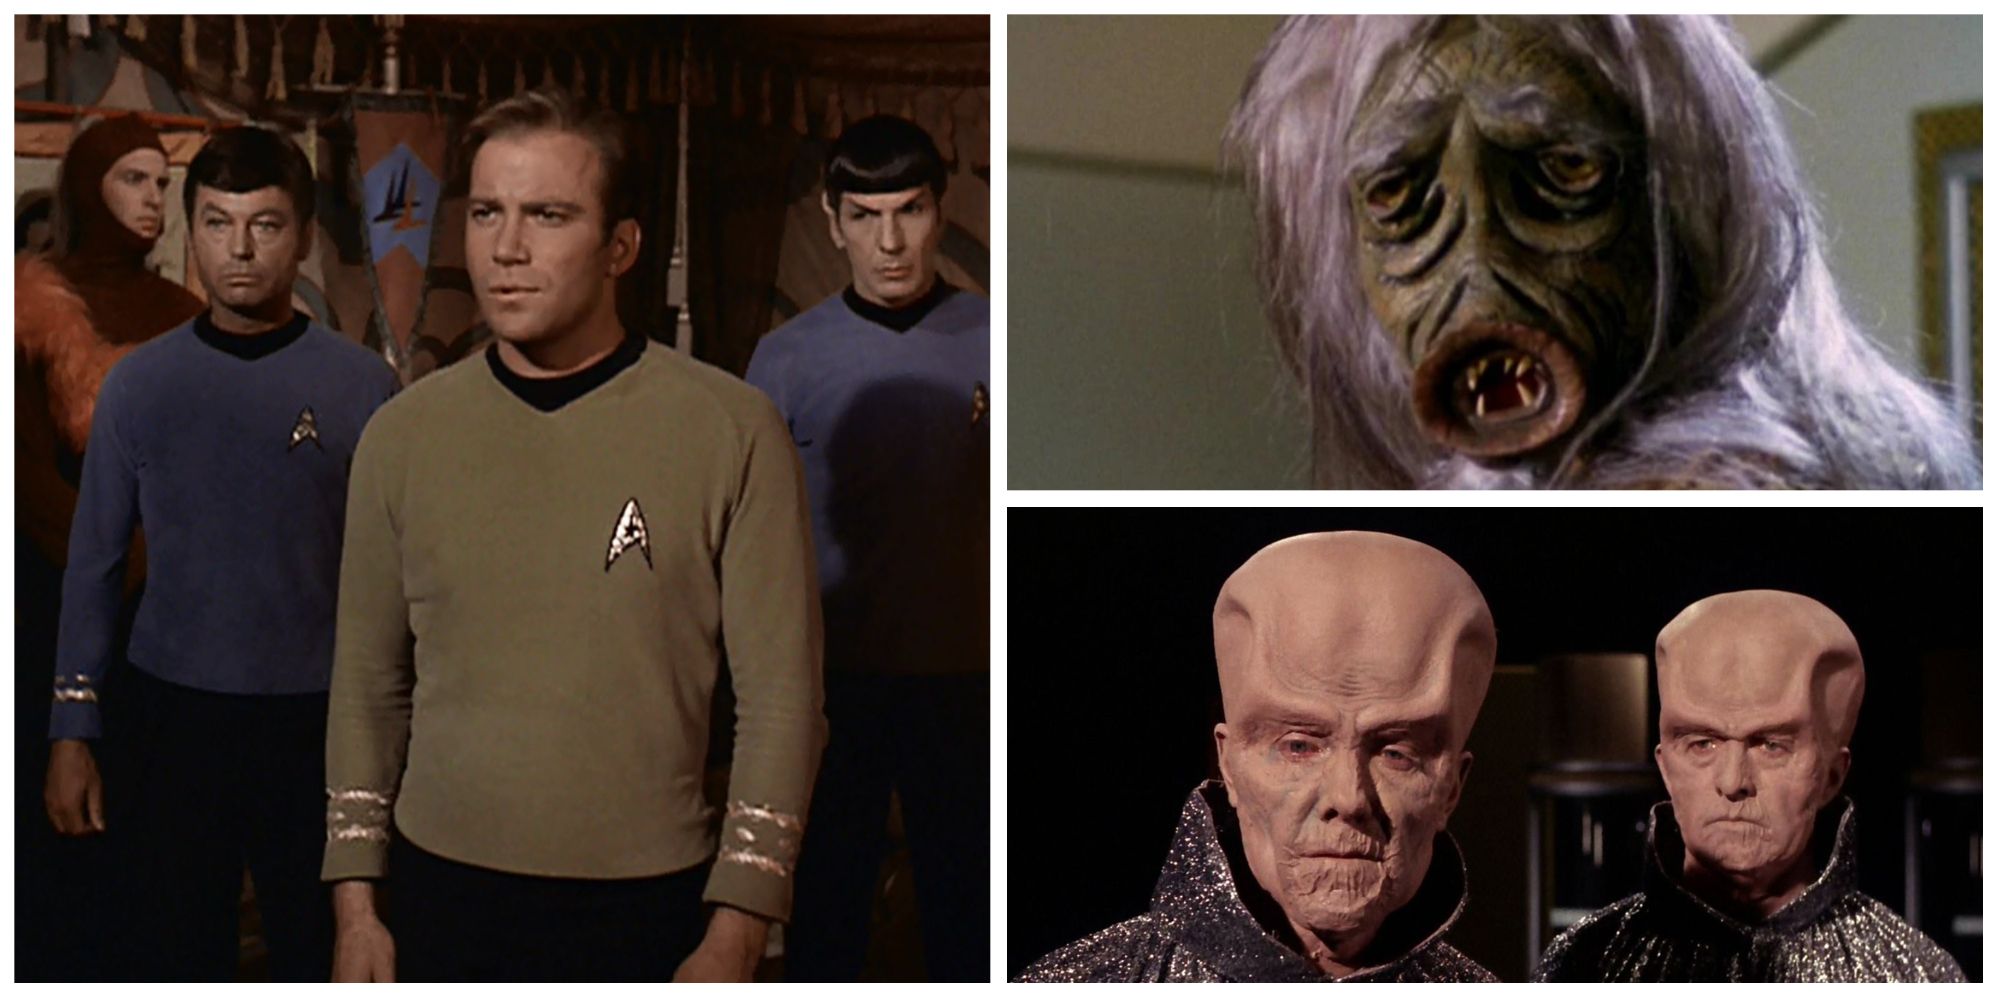 captain kirk, bones and spock with alien creatures from star trek the original series